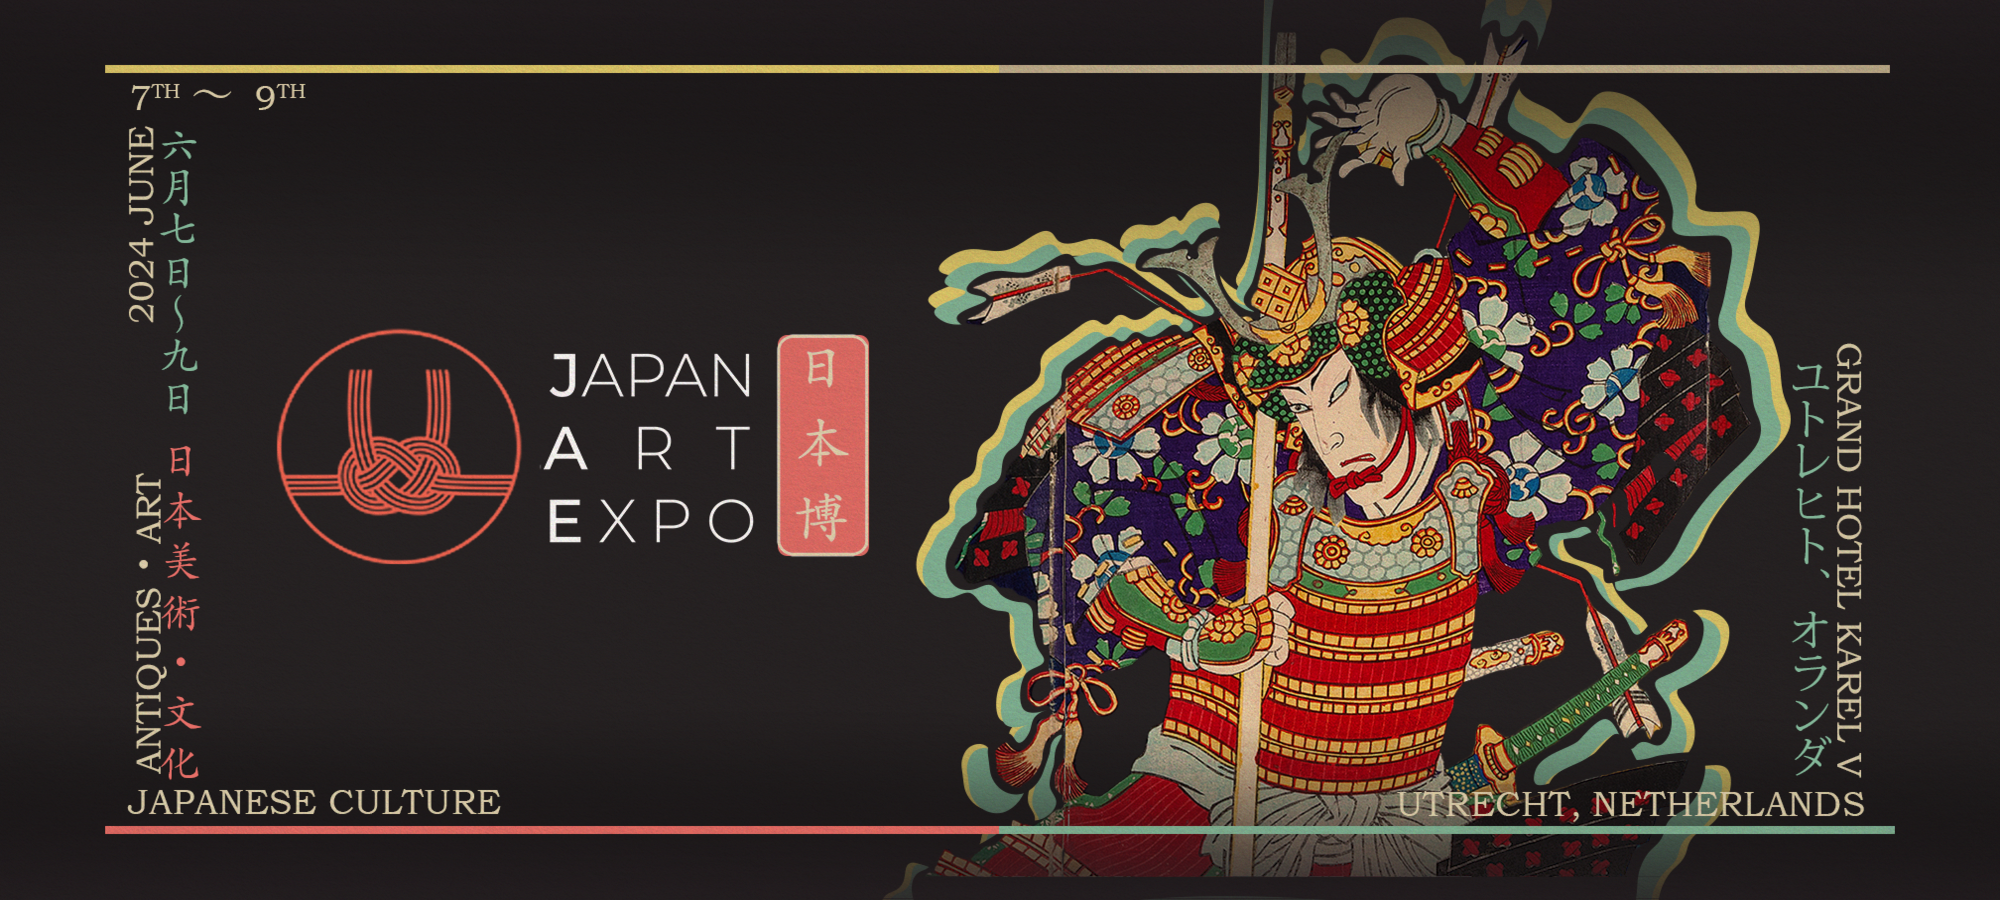 Japan Art Expo